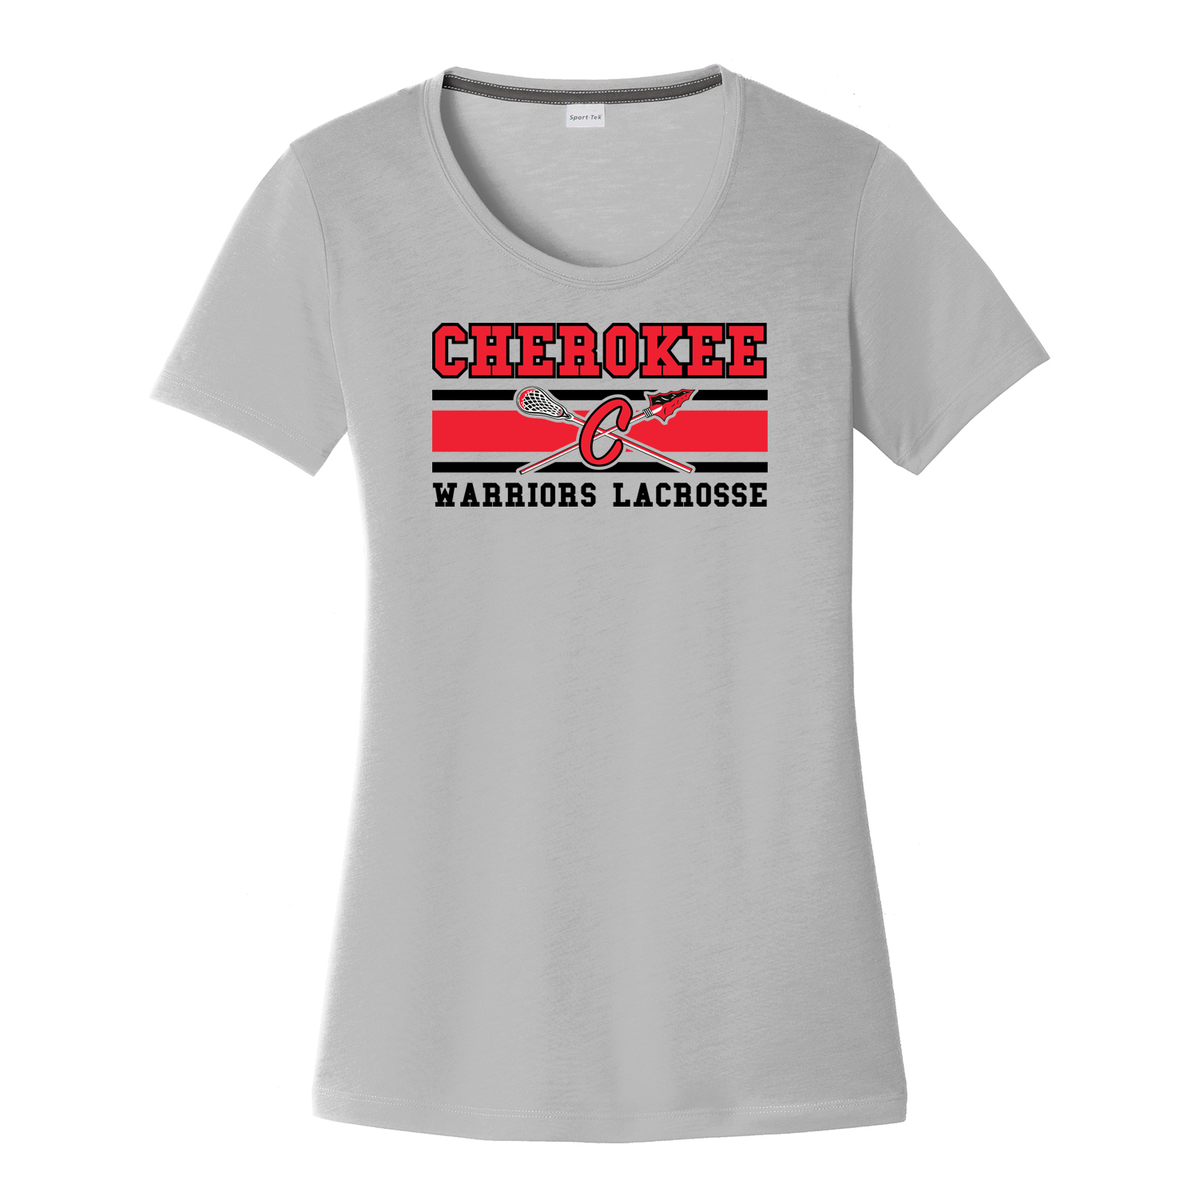 Cherokee Warriors Lacrosse Women's CottonTouch Performance T-Shirt